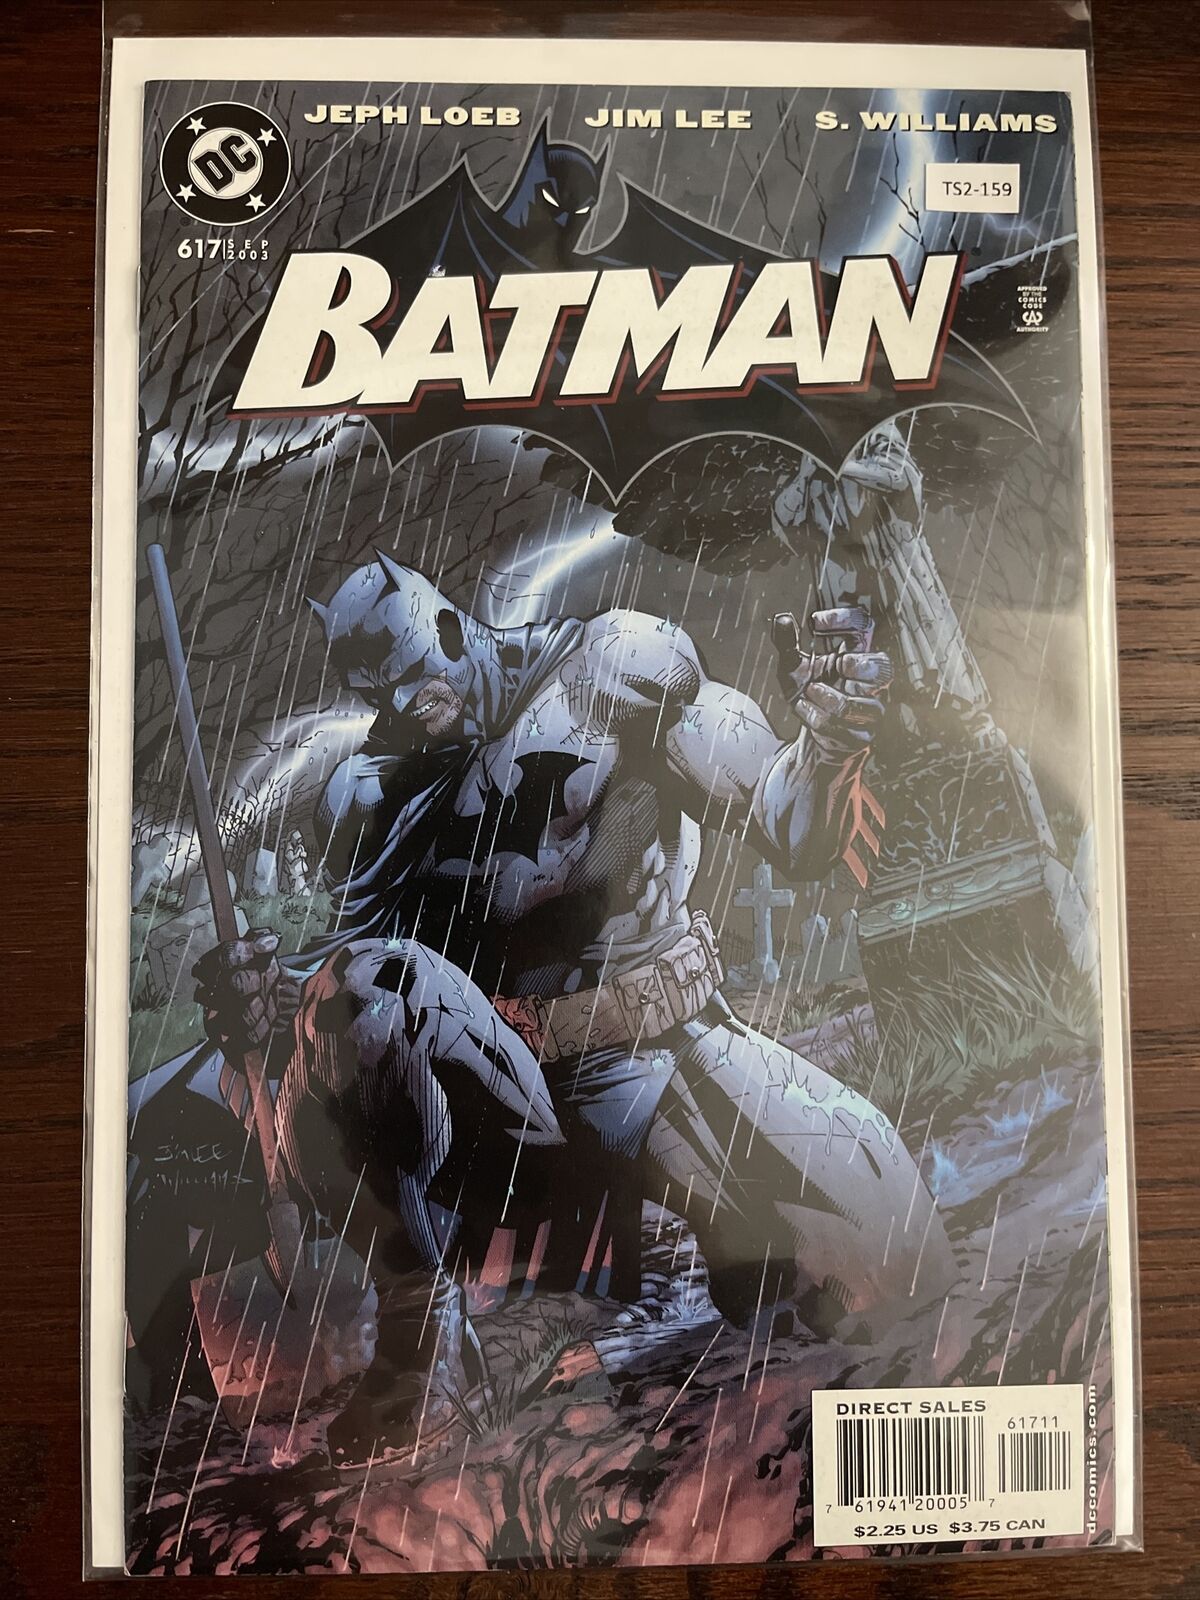 BATMAN #617 DC COMIC BOOK HIGH GRADE 8.0 VF TS2-159